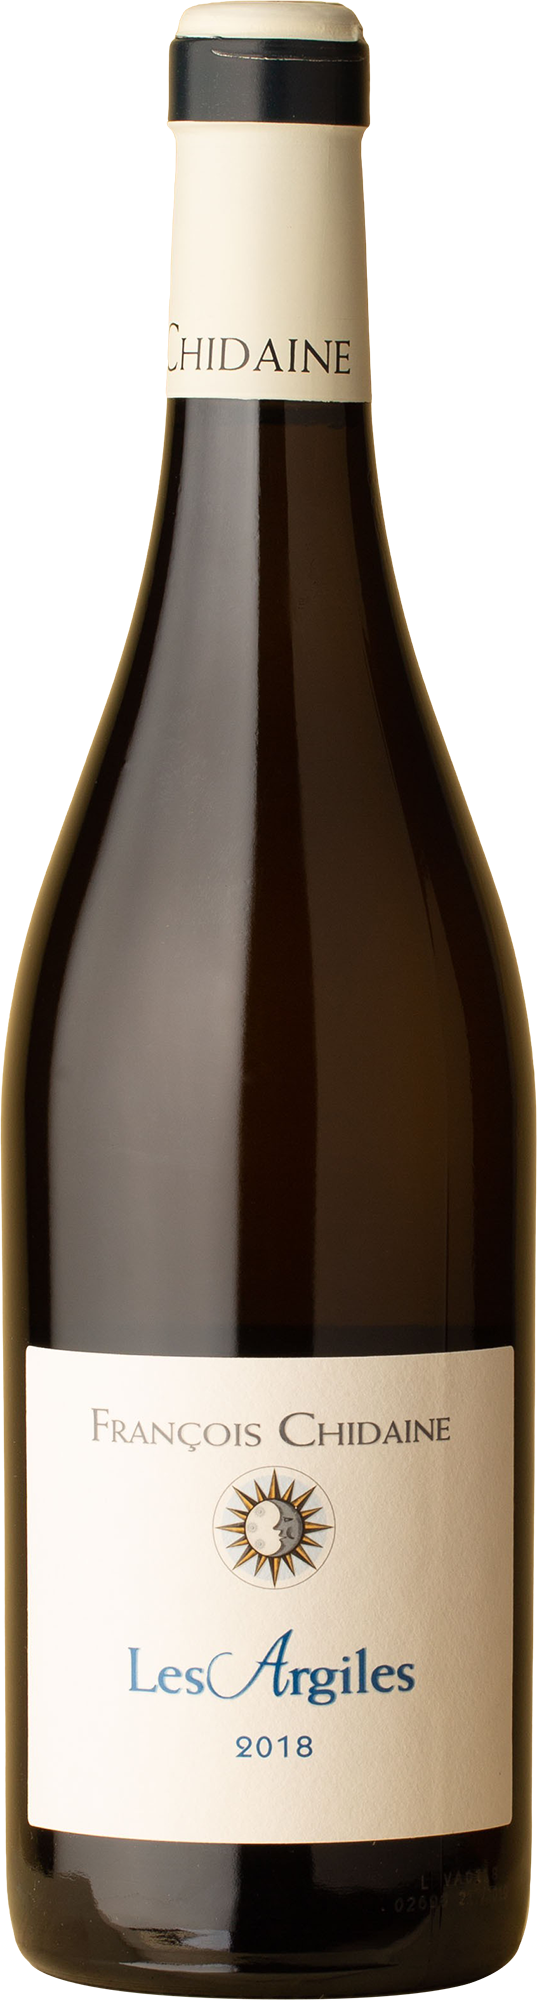 François Chidaine - Les Argiles Chenin Blanc 2018 White Wine